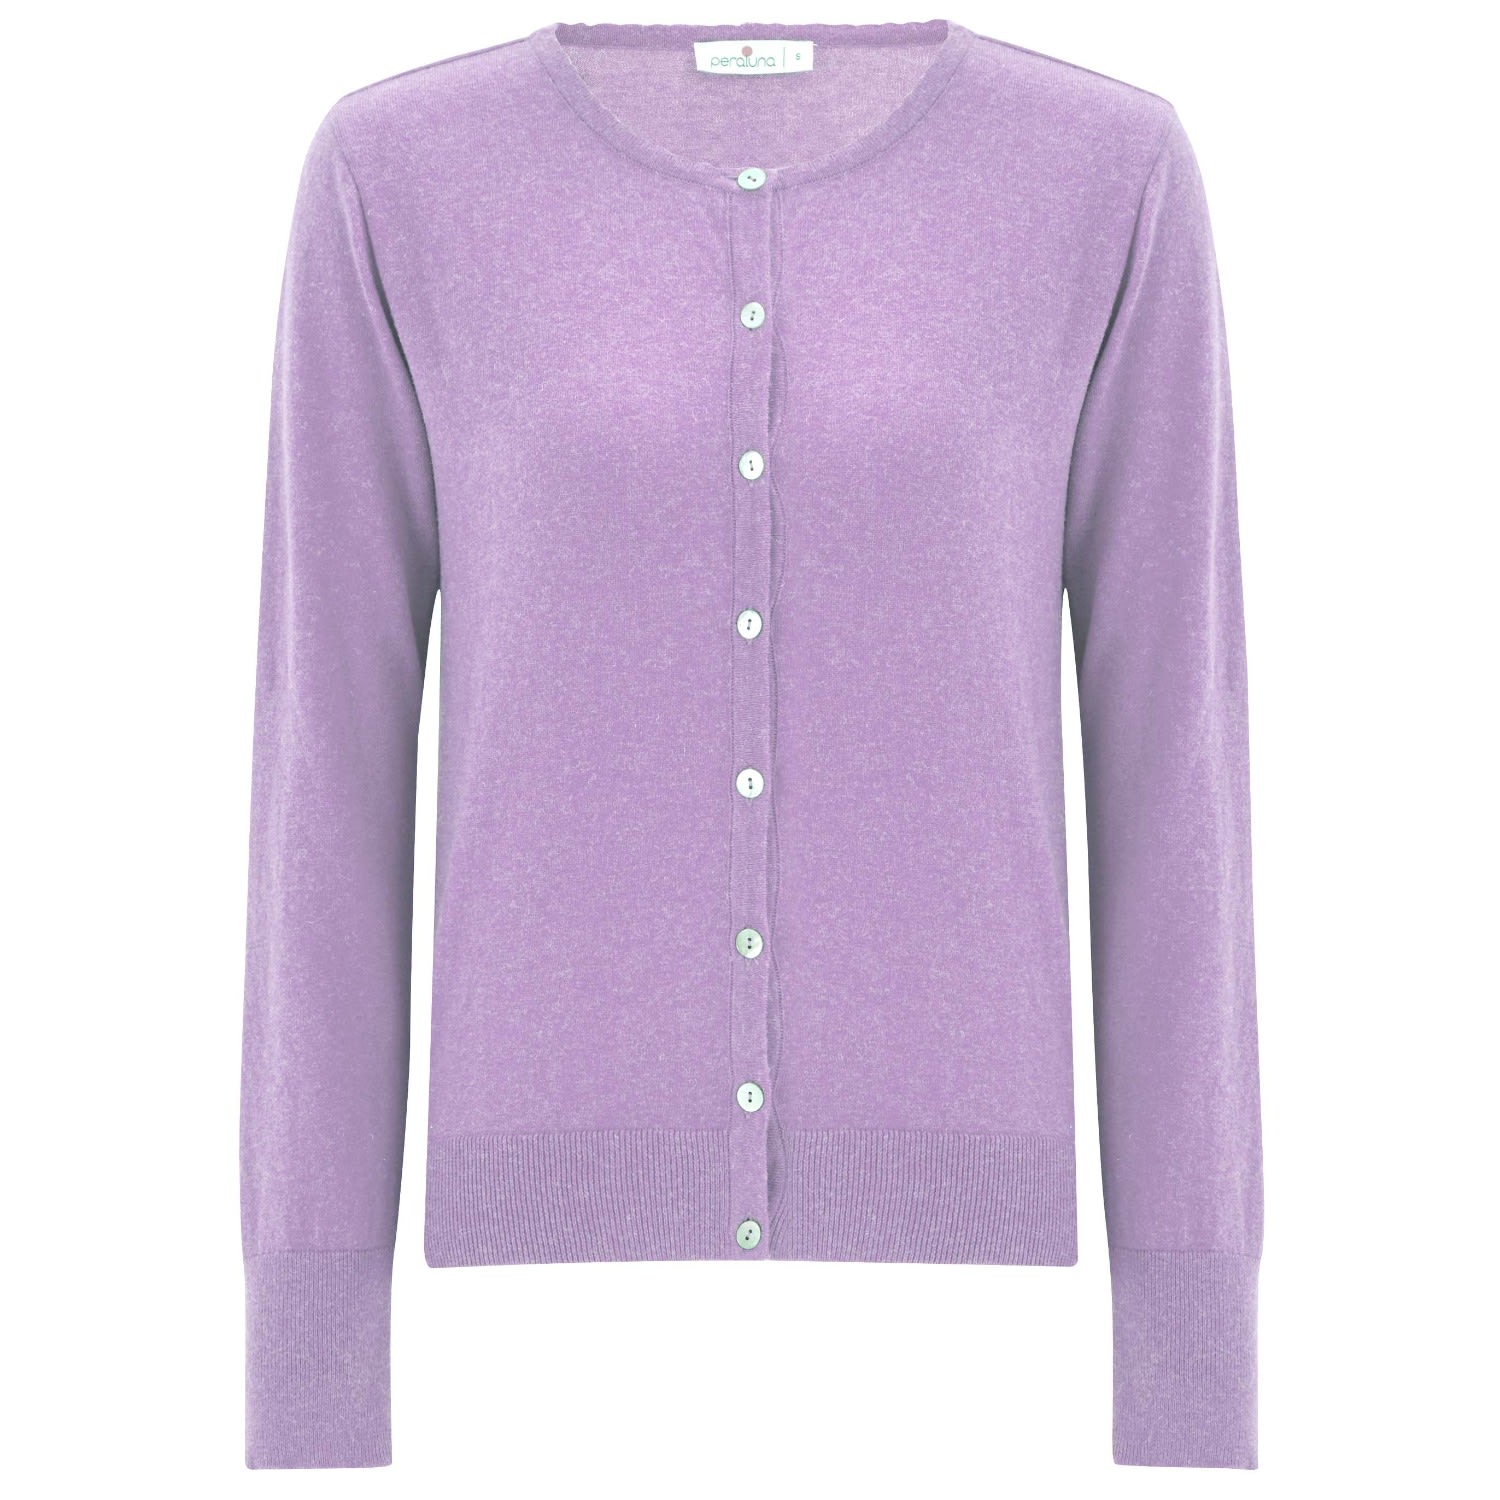 Peraluna Women's Pink / Purple Classic Basic O-neck Knitwear Cardigan - Lilac